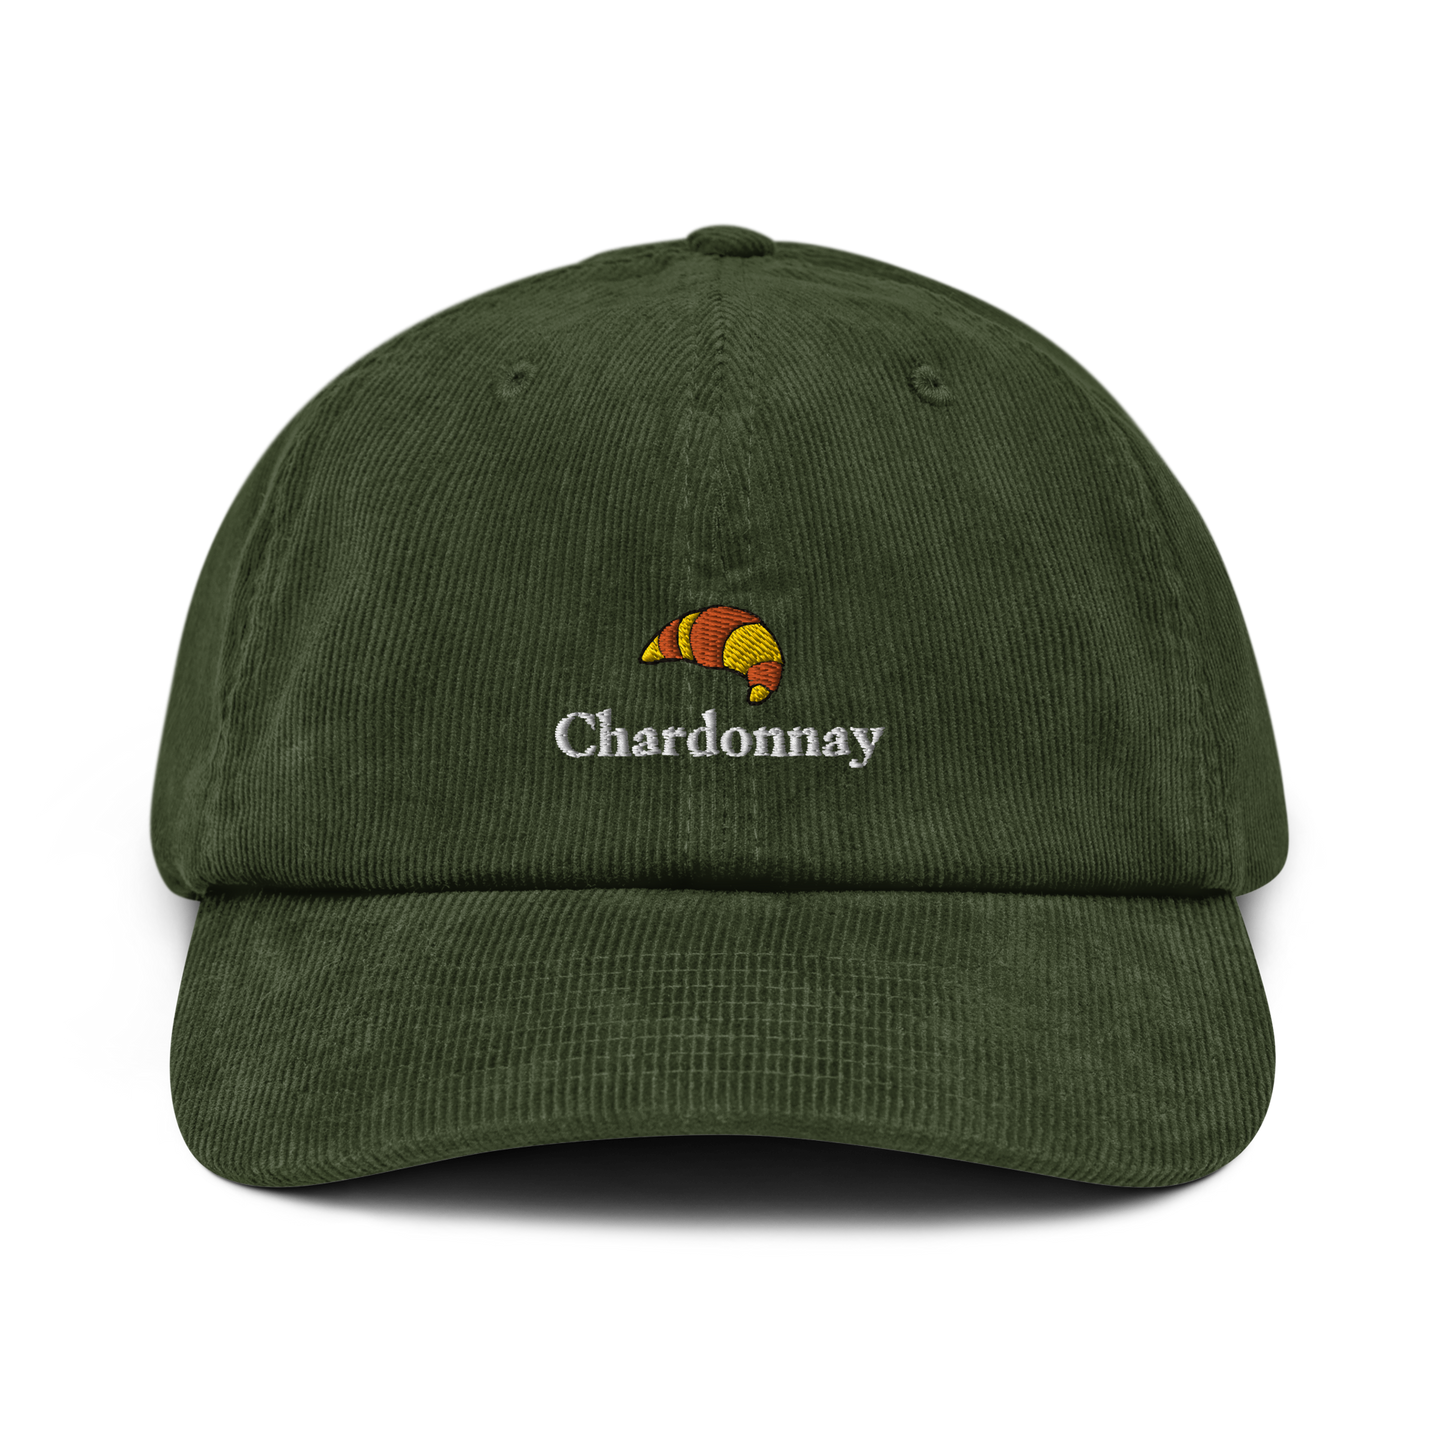 Chardonnay green corduroy cap